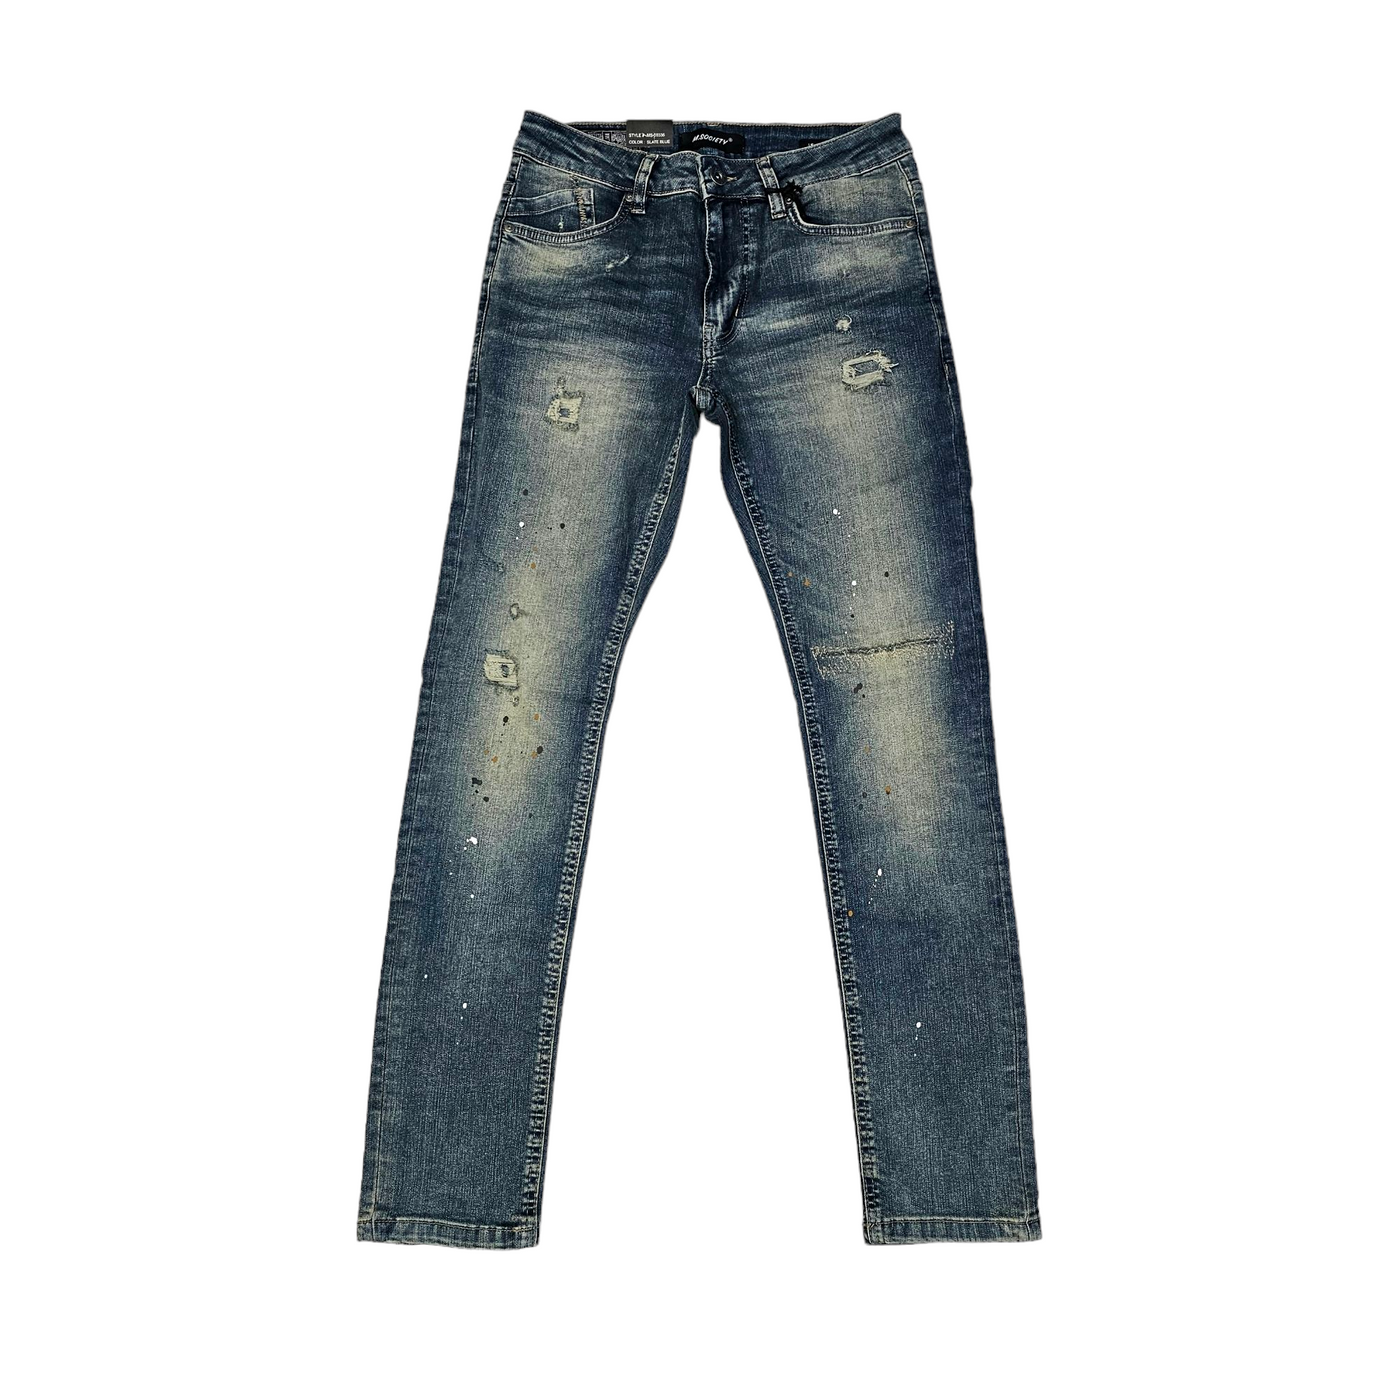 M. Society Men's Skinny Fit Jeans Slate Blue 80336